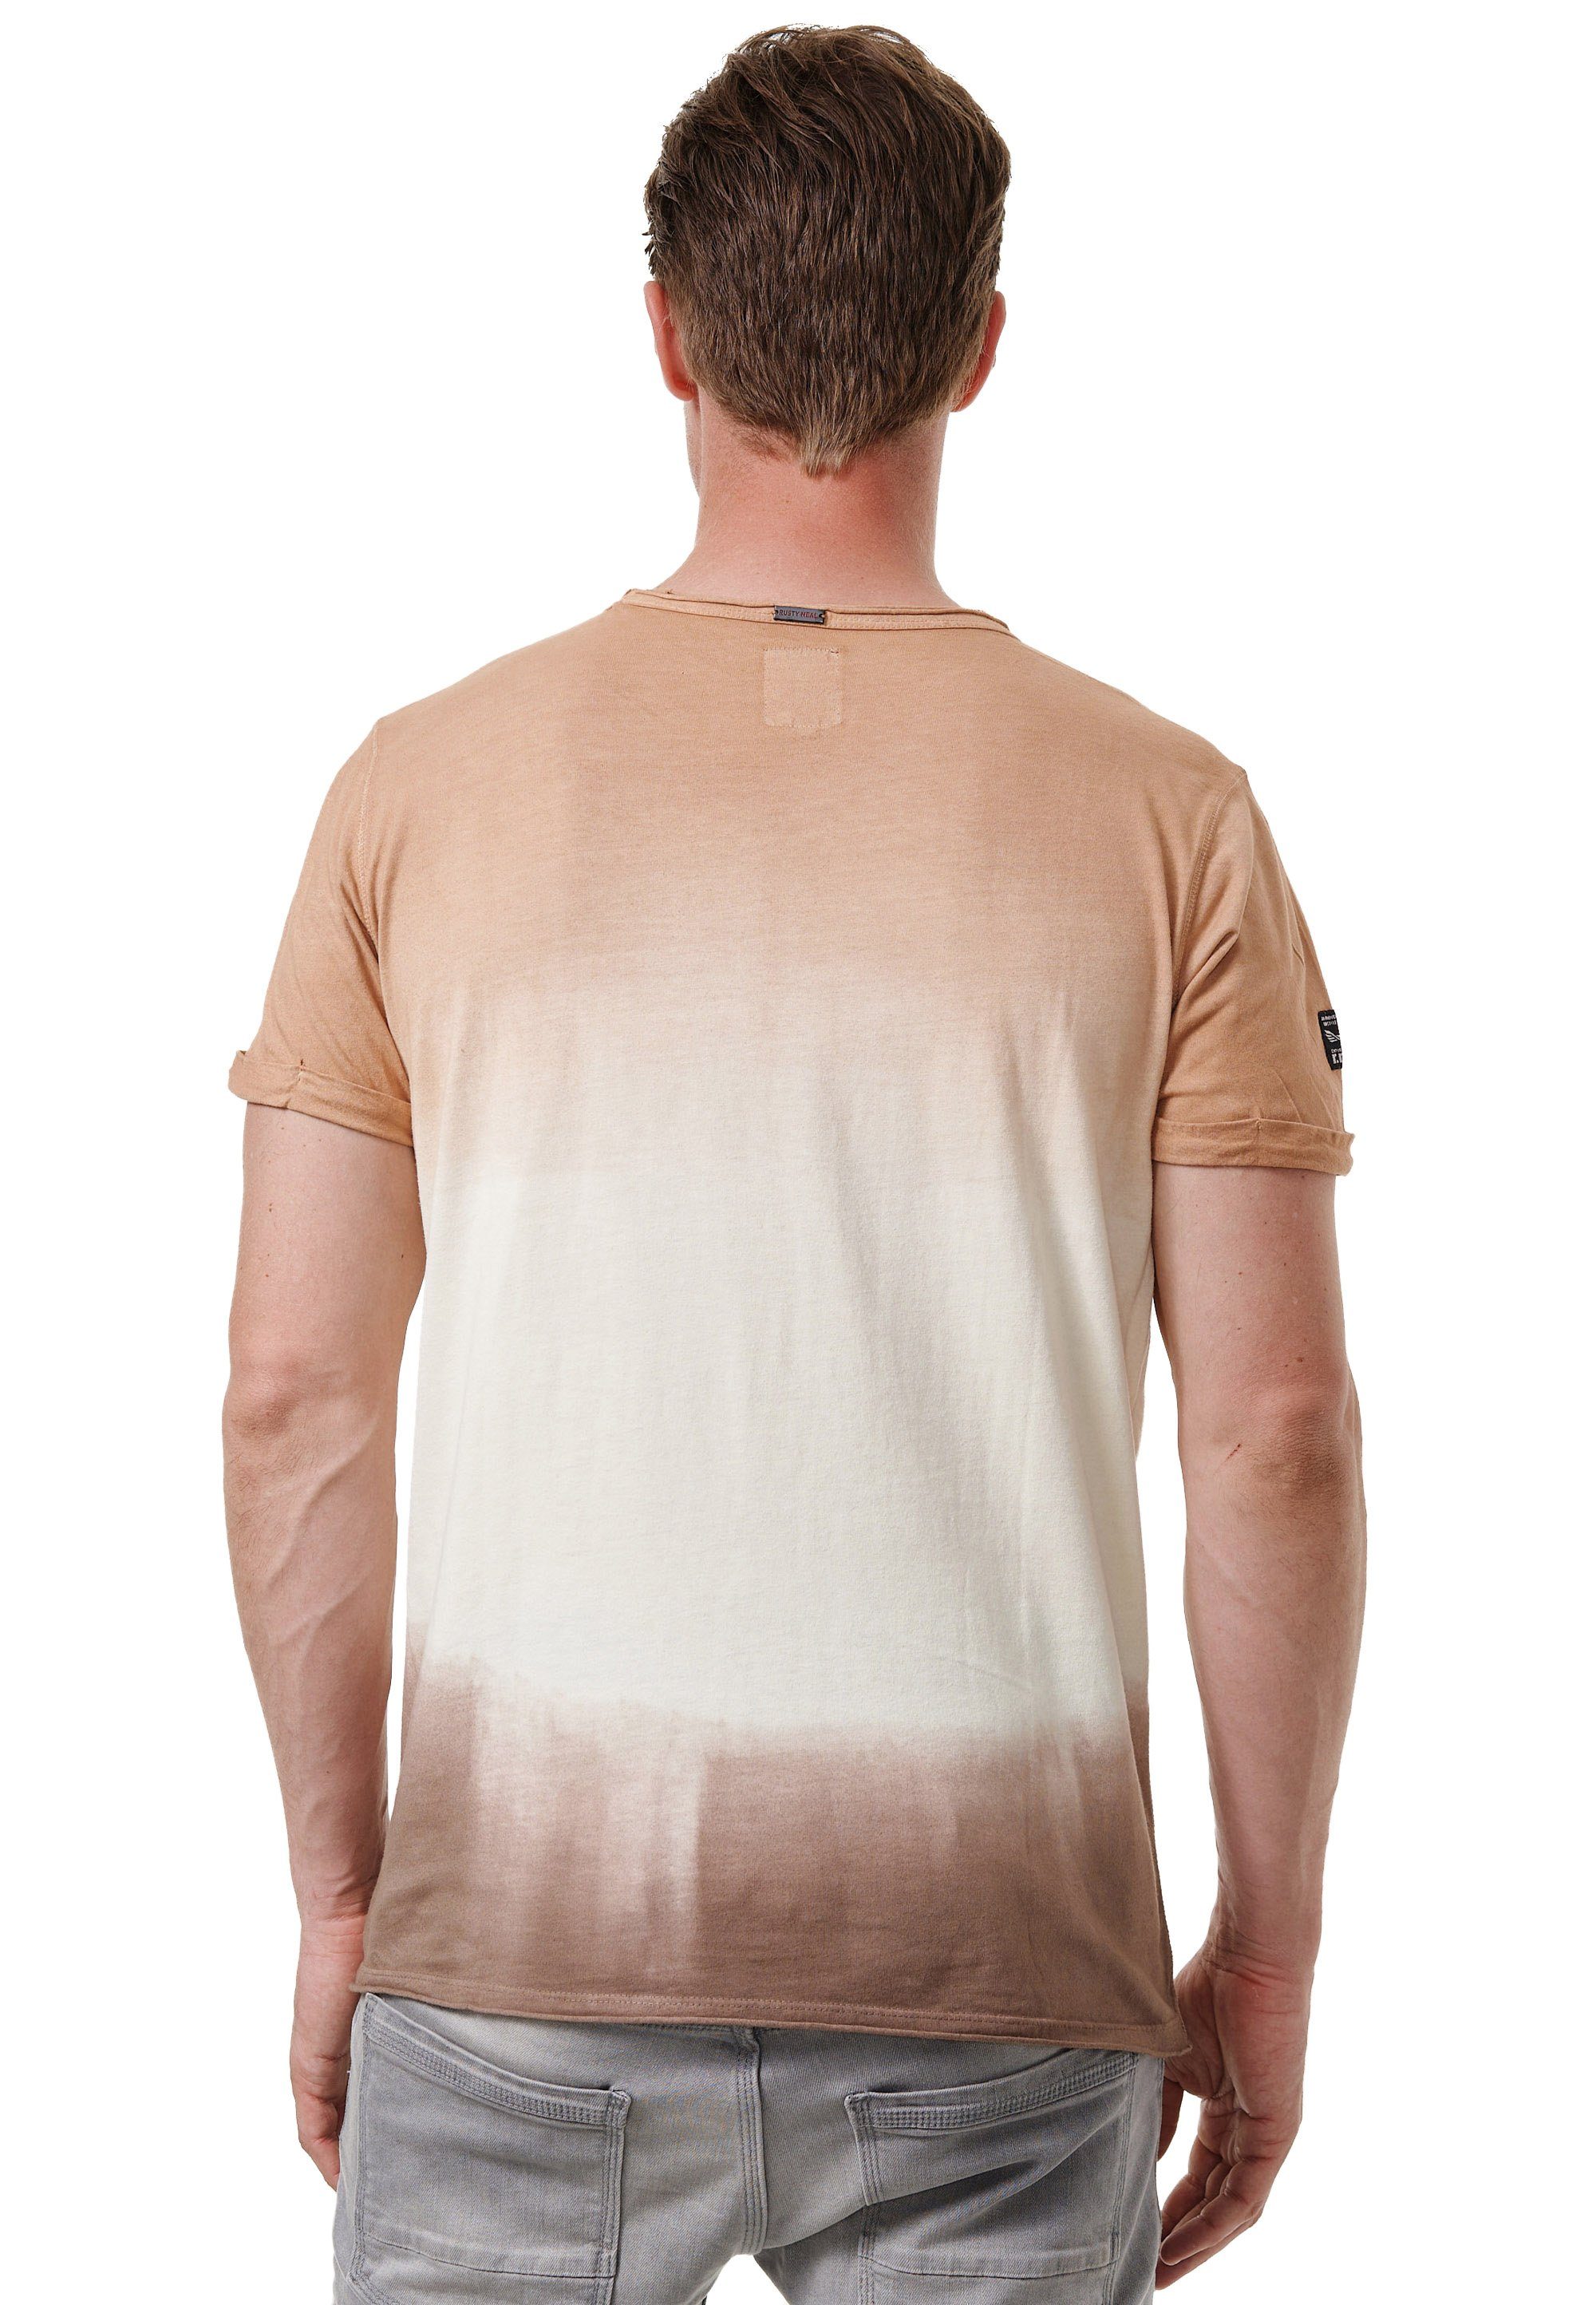 Rusty Used-Optik toller braun-weiß T-Shirt in Neal